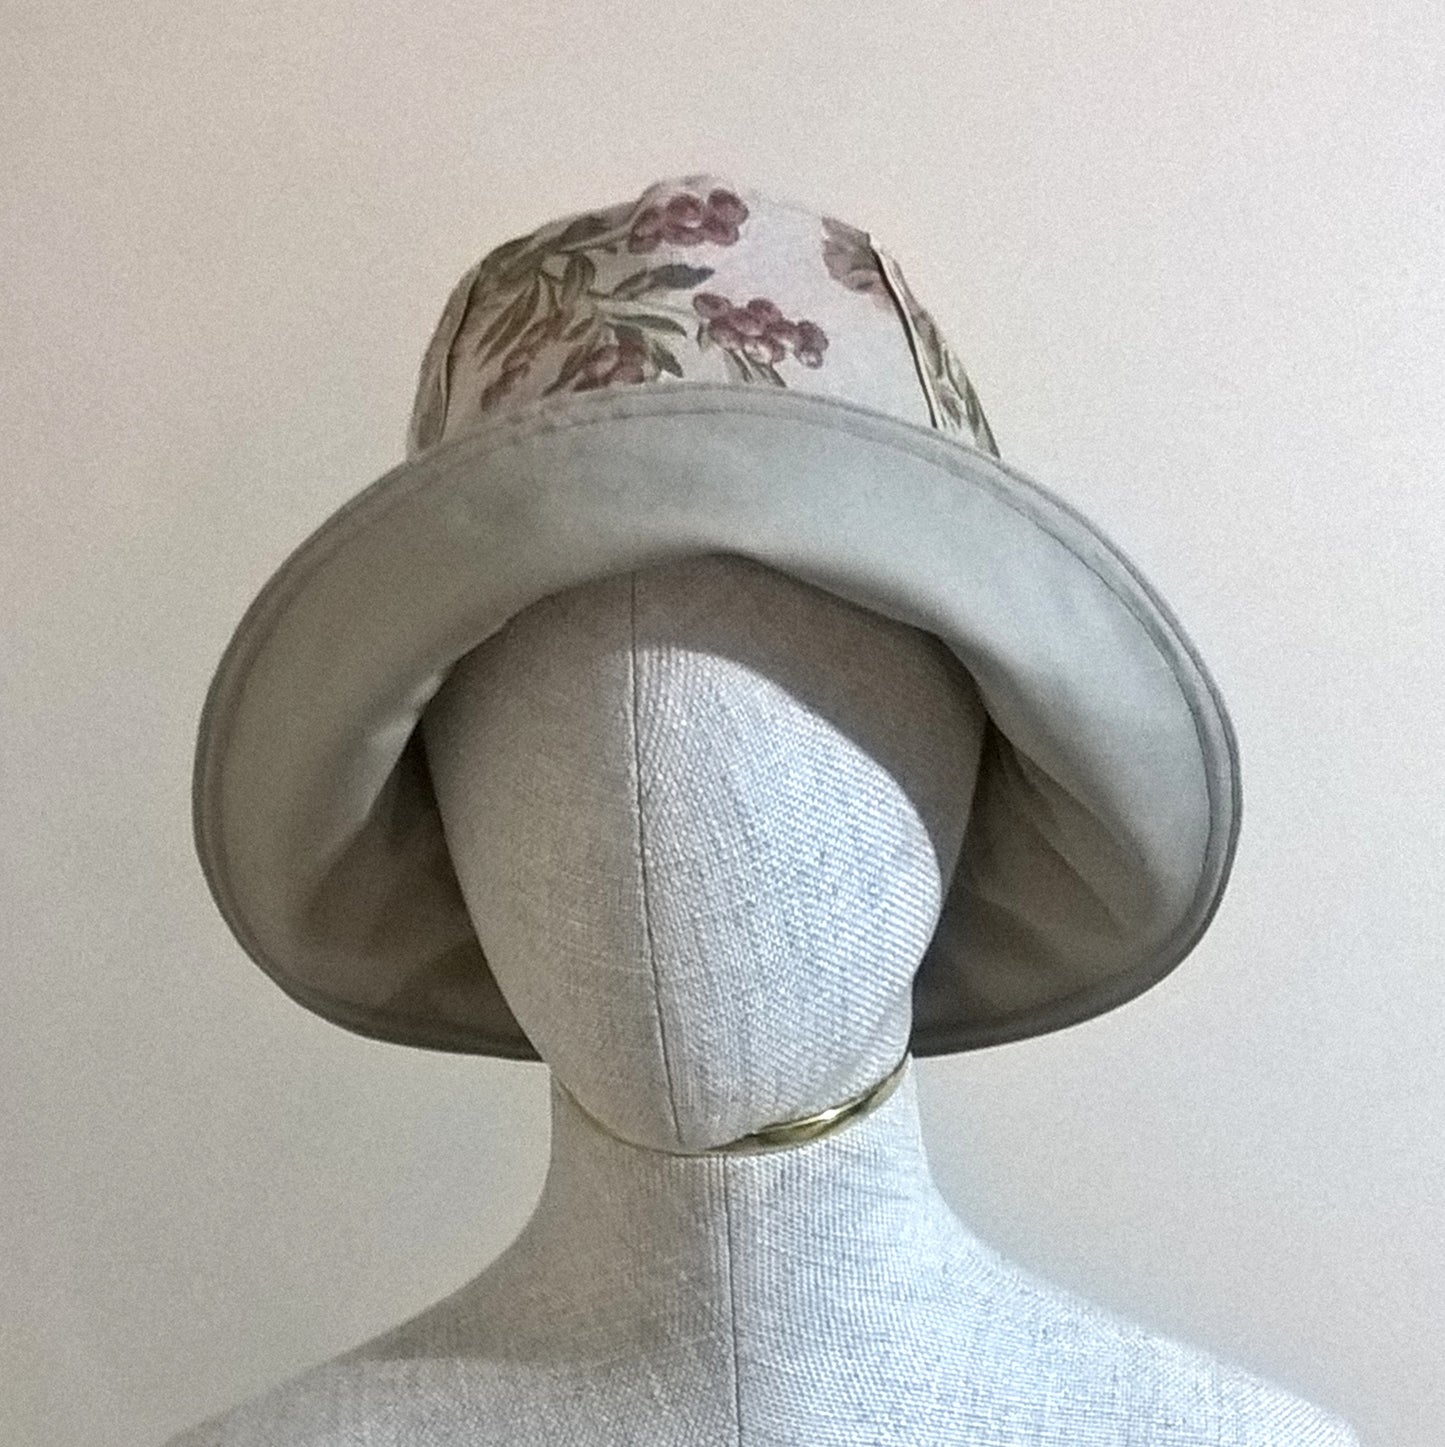 Linen Bucket Hat in vintage floral with adjustable tie